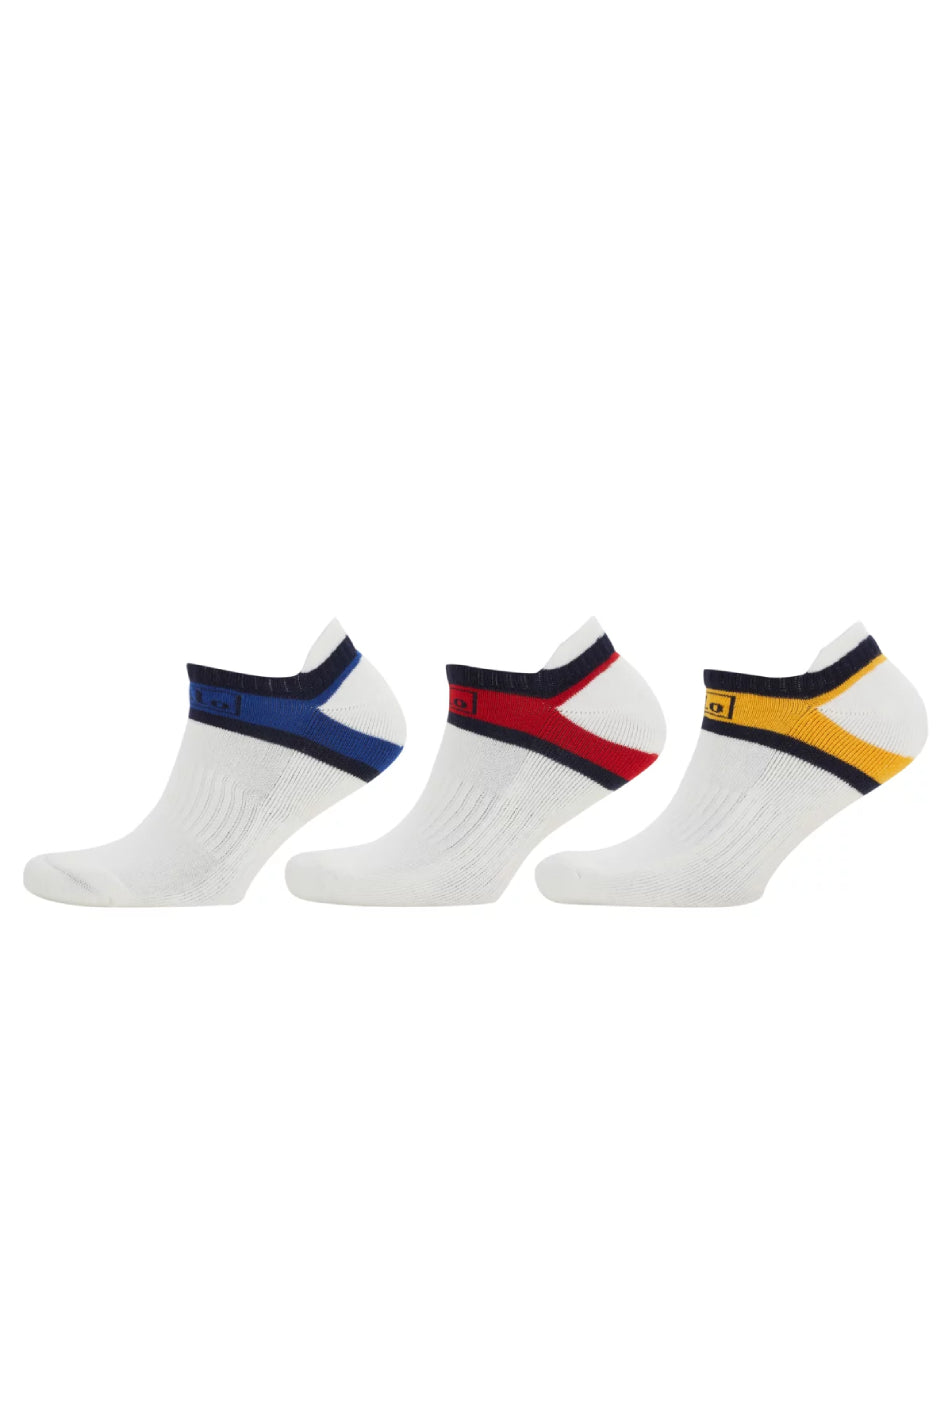 Ralph Lauren 3 Pack Men's Classic Stripe Sock